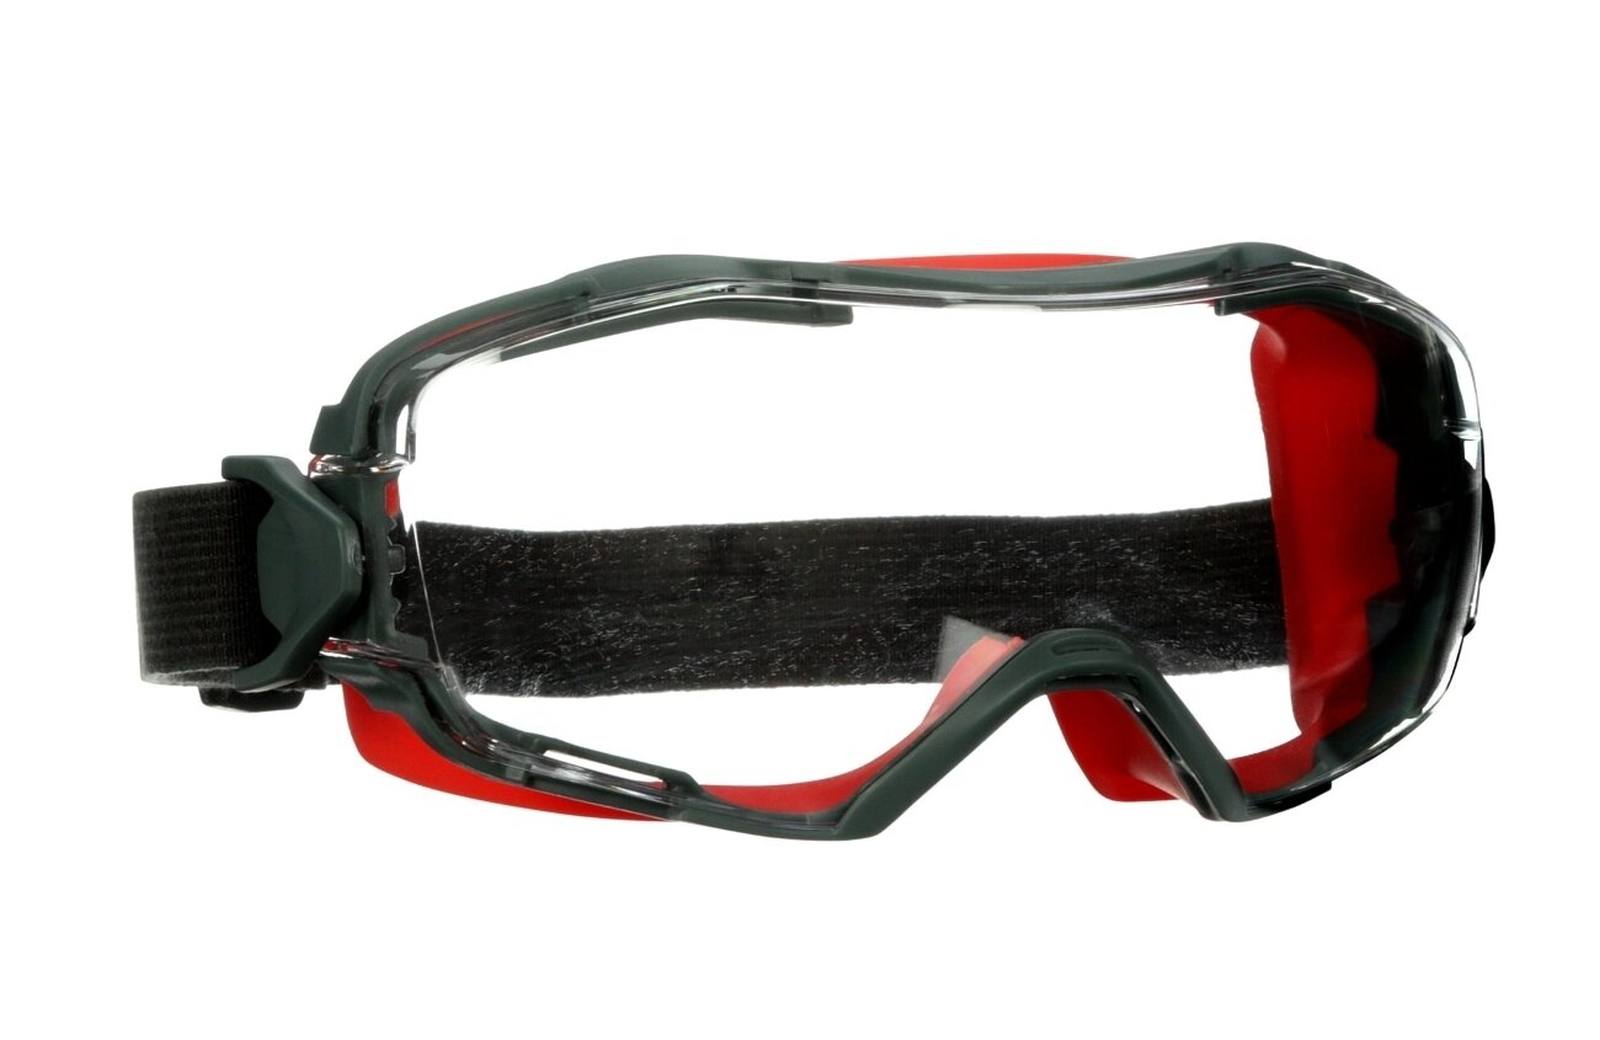 Lunettes-masque 3M GoggleGear 6000, monture rouge, traitement anti-buée/anti-rayures Scotchgard (K